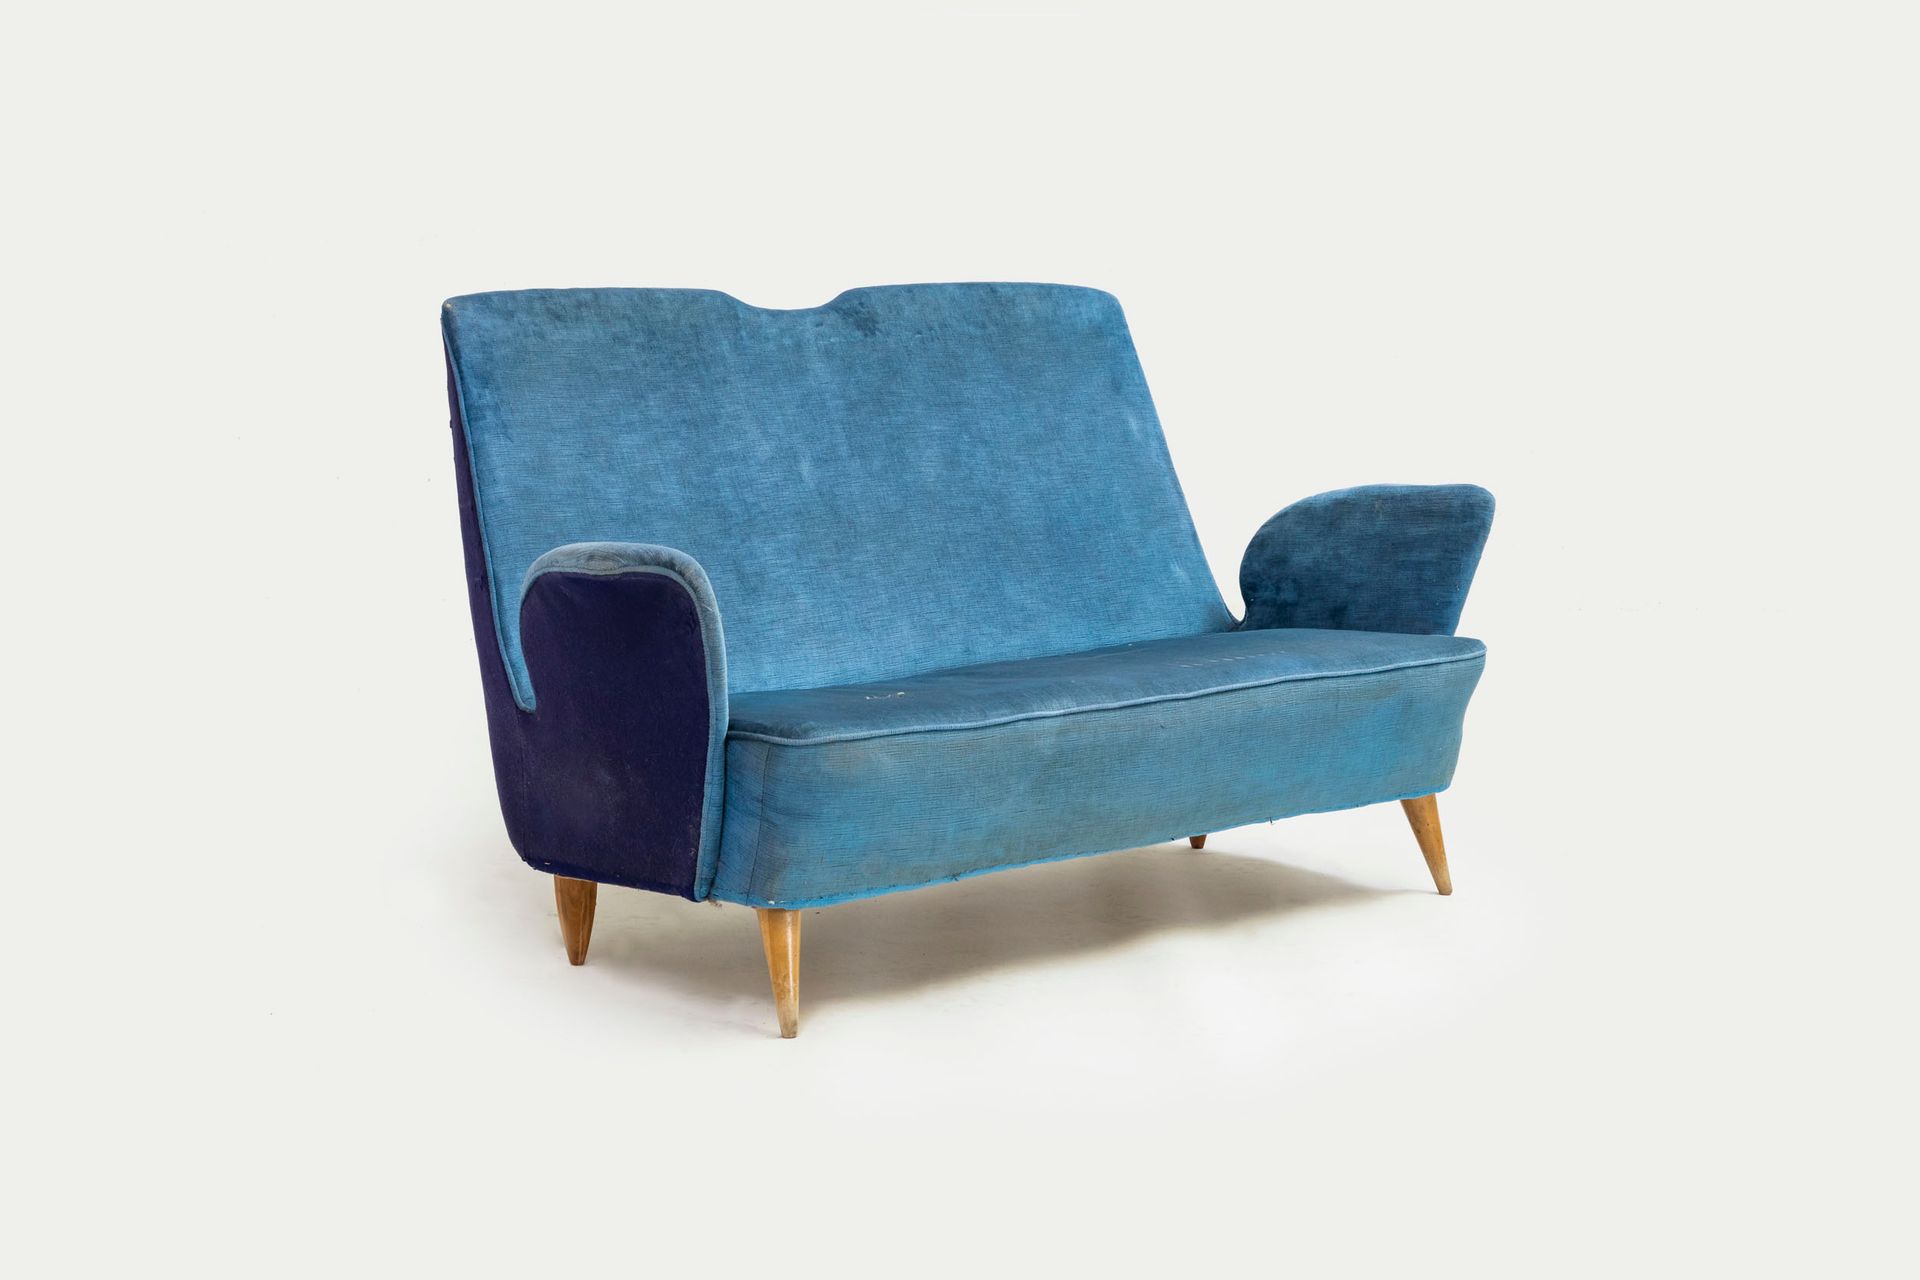 MANIFATTURA ITALIANA 沙发。车削的木头，软垫的织物。1950s.
厘米78x150x60
意大利沙发 



一般的复古状况，原来的布料被洗&hellip;